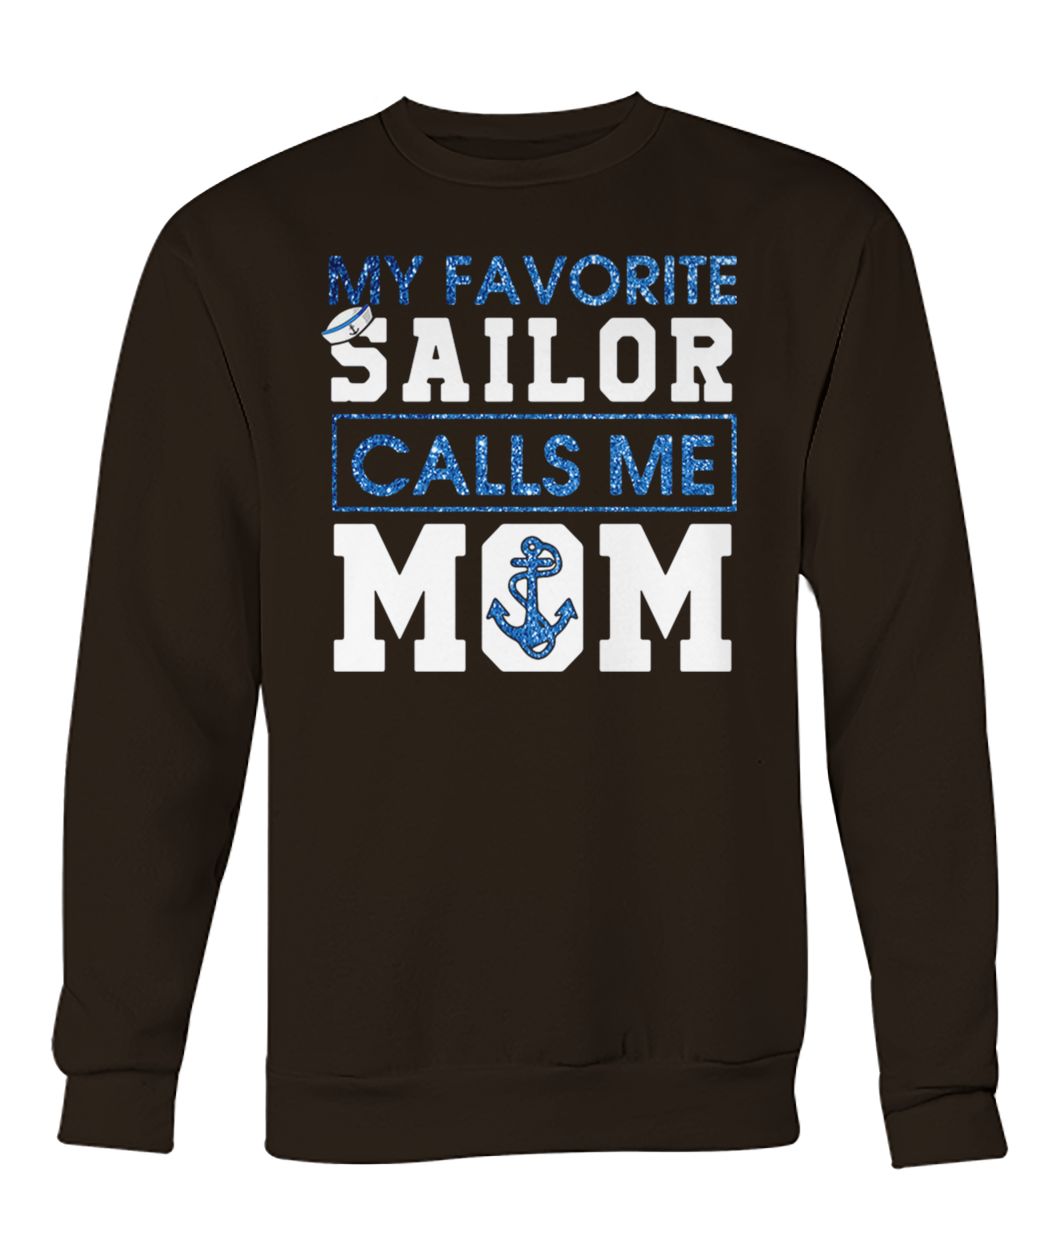 My favorite sailor calls me mom crew neck sweatshirt